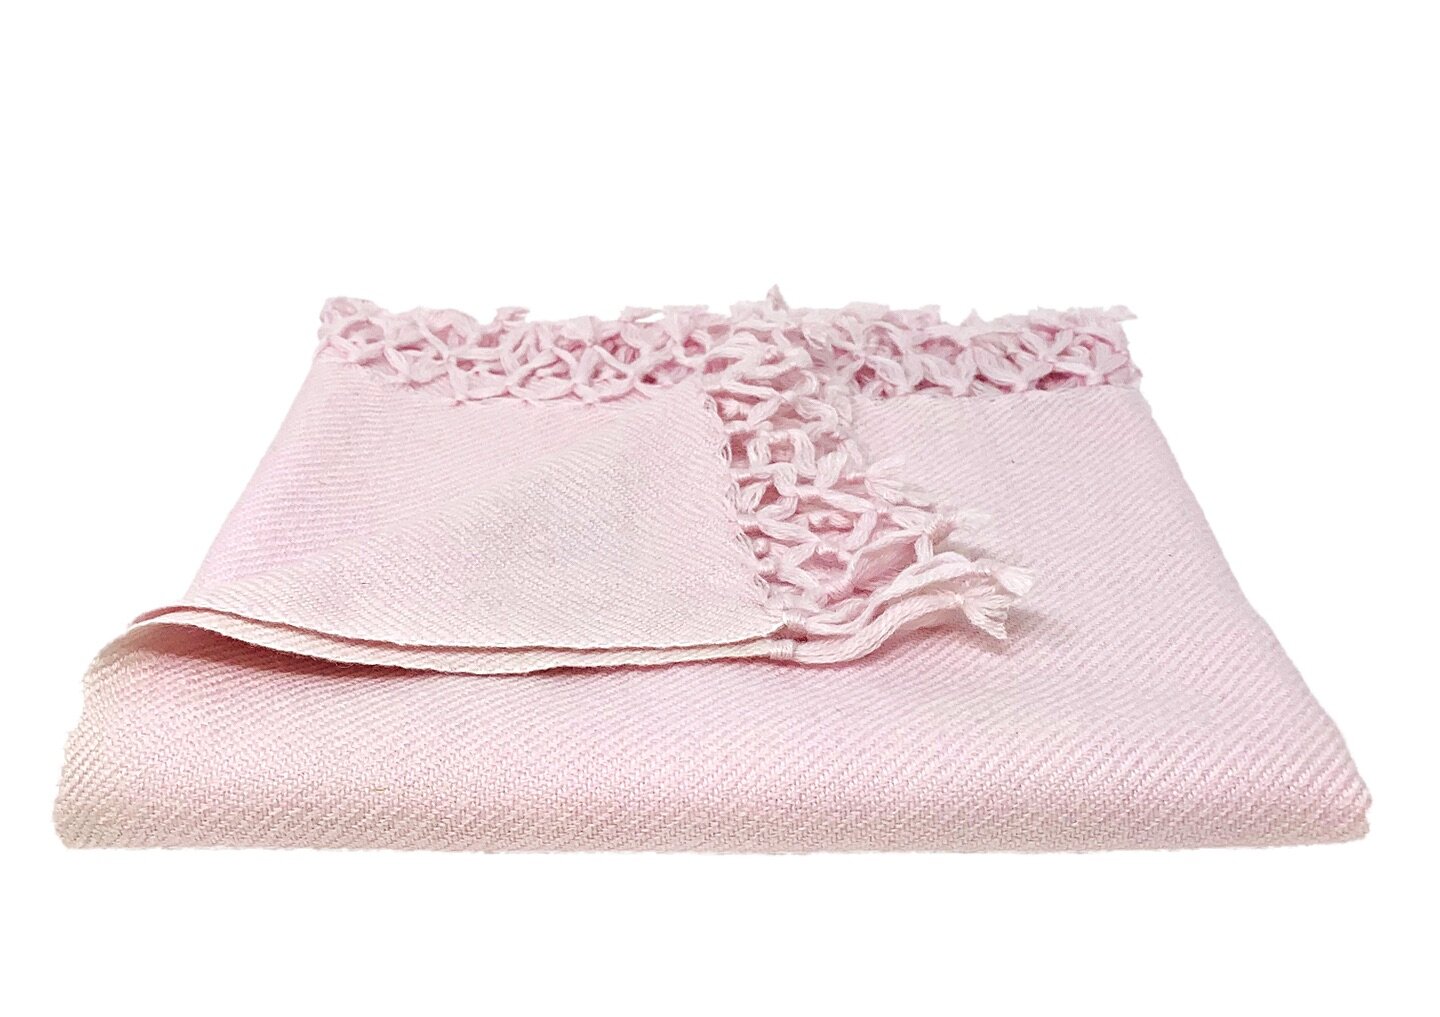 Gracie Oaks SanderSon 100 Cashmere Baby Blanket Wayfair